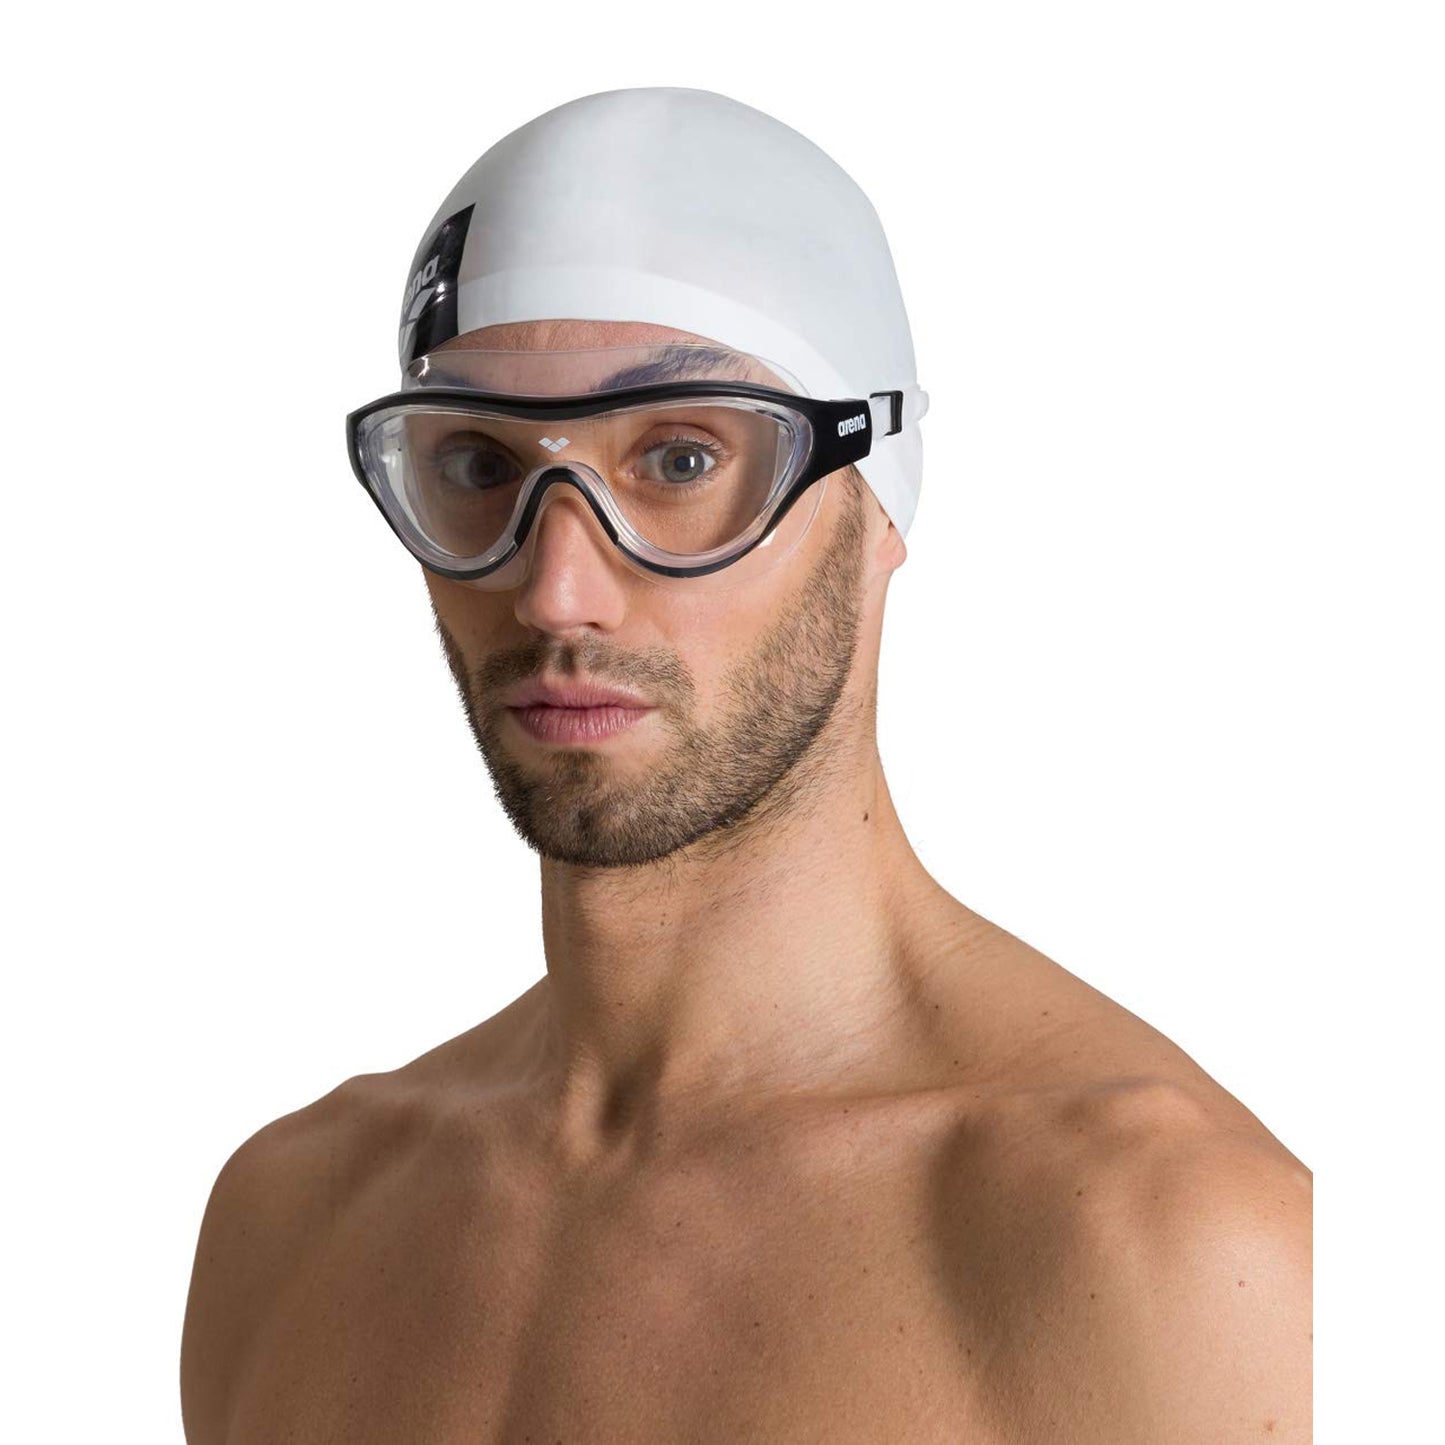 Arena The One Mask Swim Goggles, Clear/Black/Transparent - Adult - Best Price online Prokicksports.com